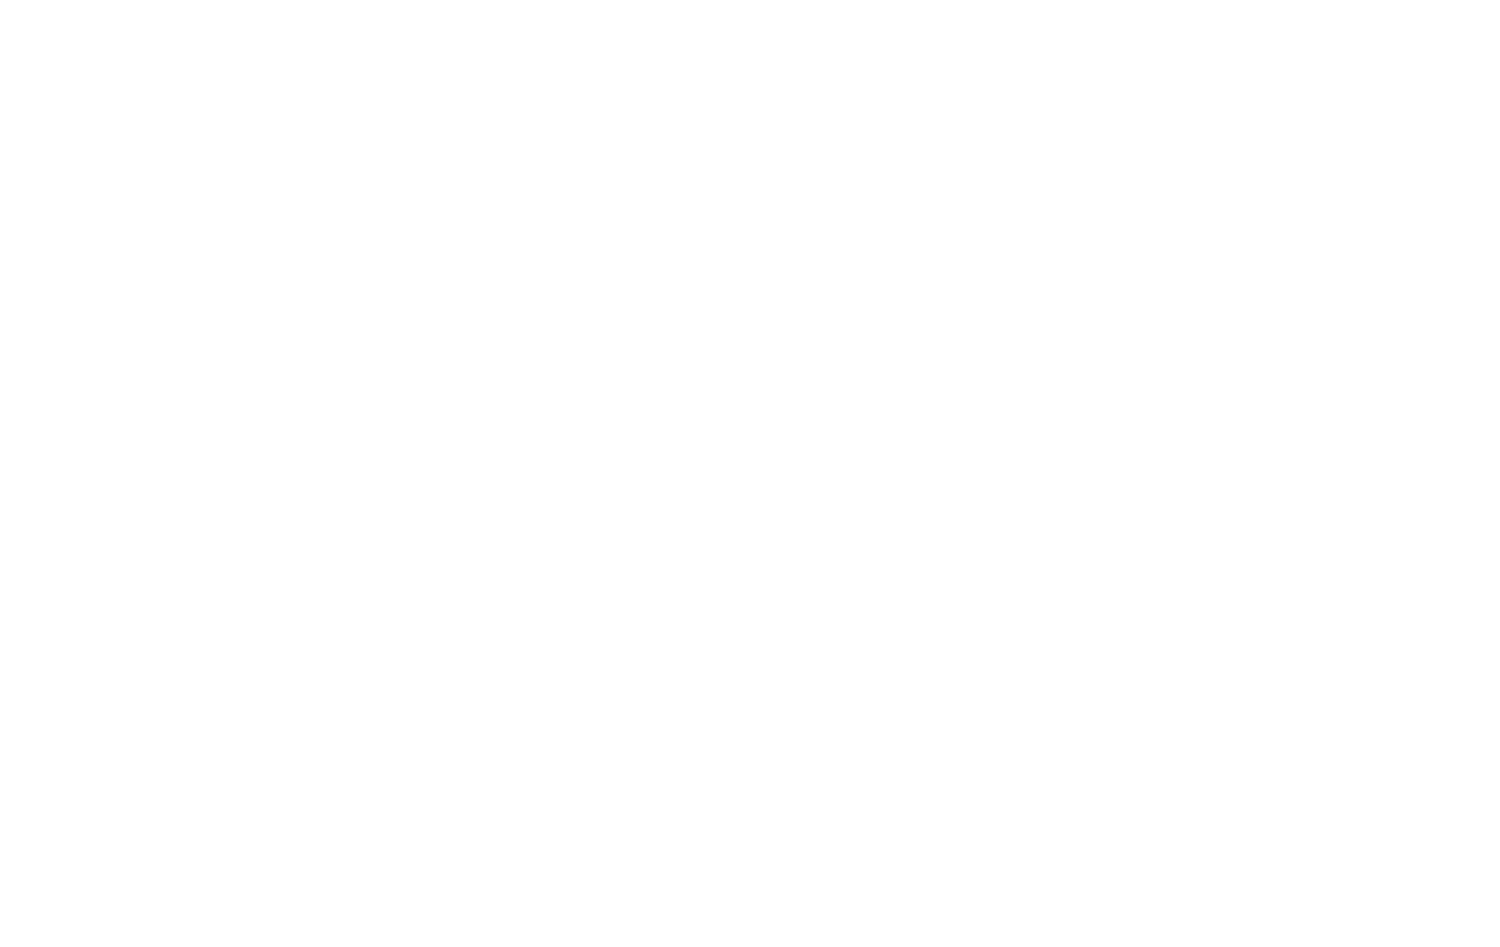 MAXIMIZE